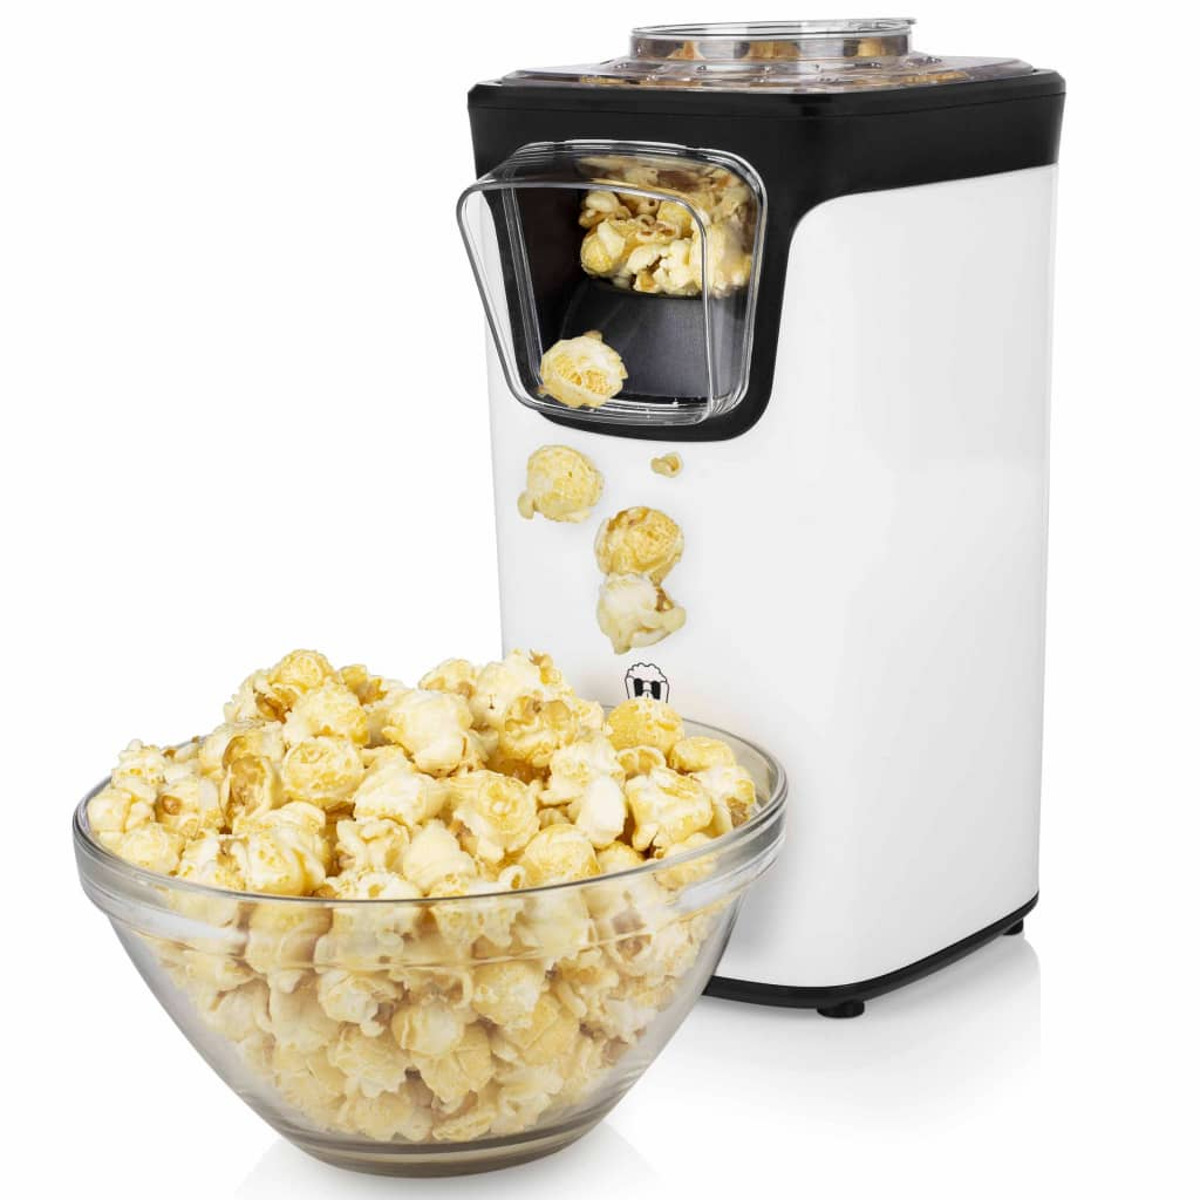 PRINCESS 426573 Popcornmaker